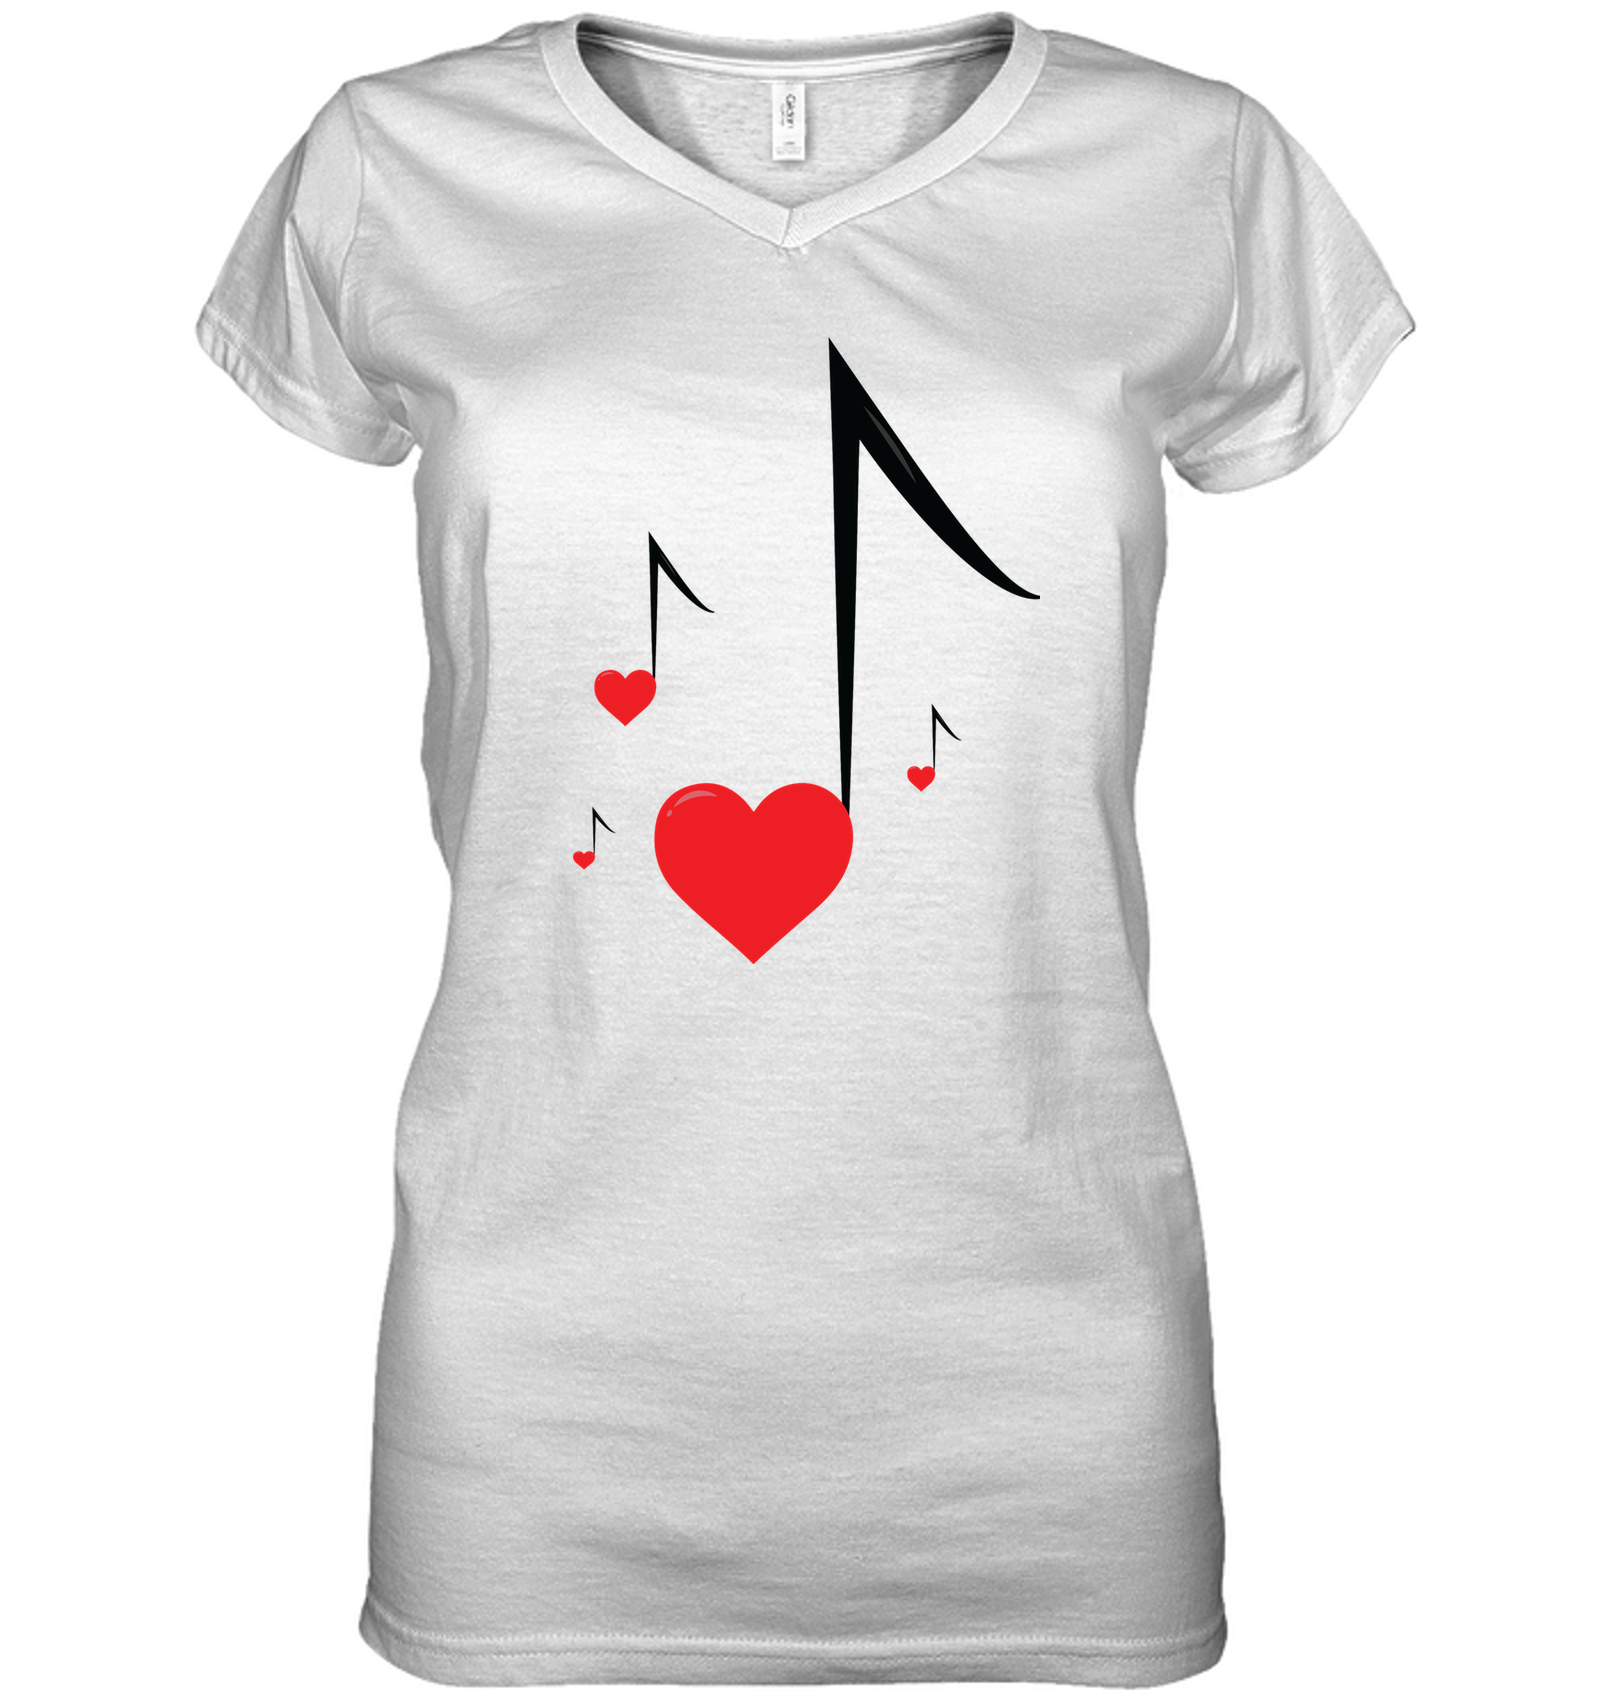 Four Floating Heart Notes  - Hanes Women's Nano-T® V-Neck T-Shirt